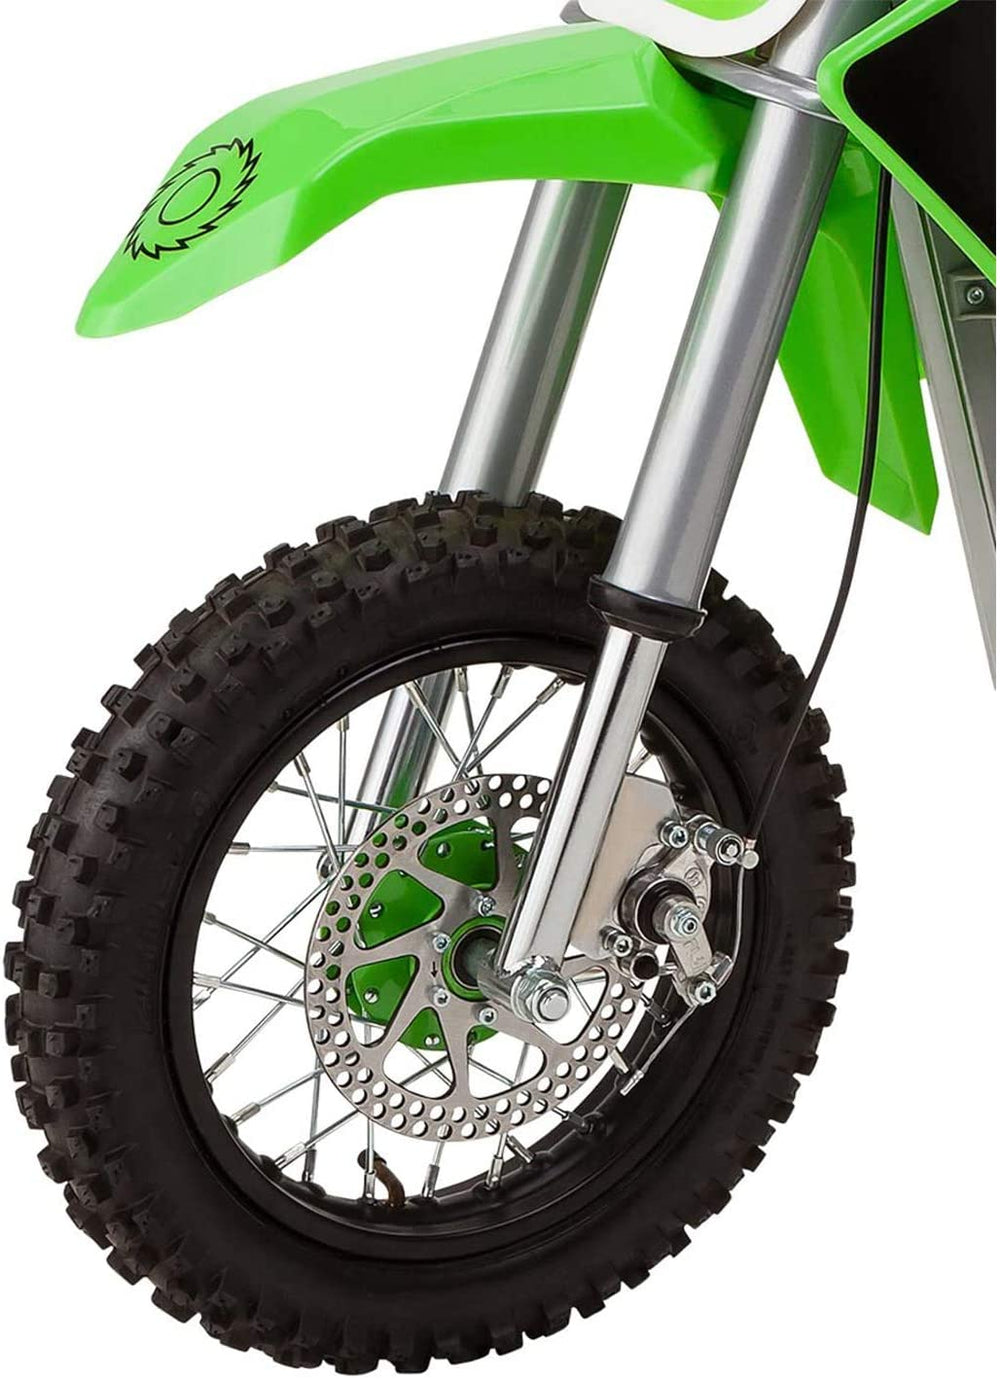 Razor SX500 Dirt Rocket McGrath Up To 40 Minute Run Time 15 MPH Electric Motocross Dirt Bike Green New